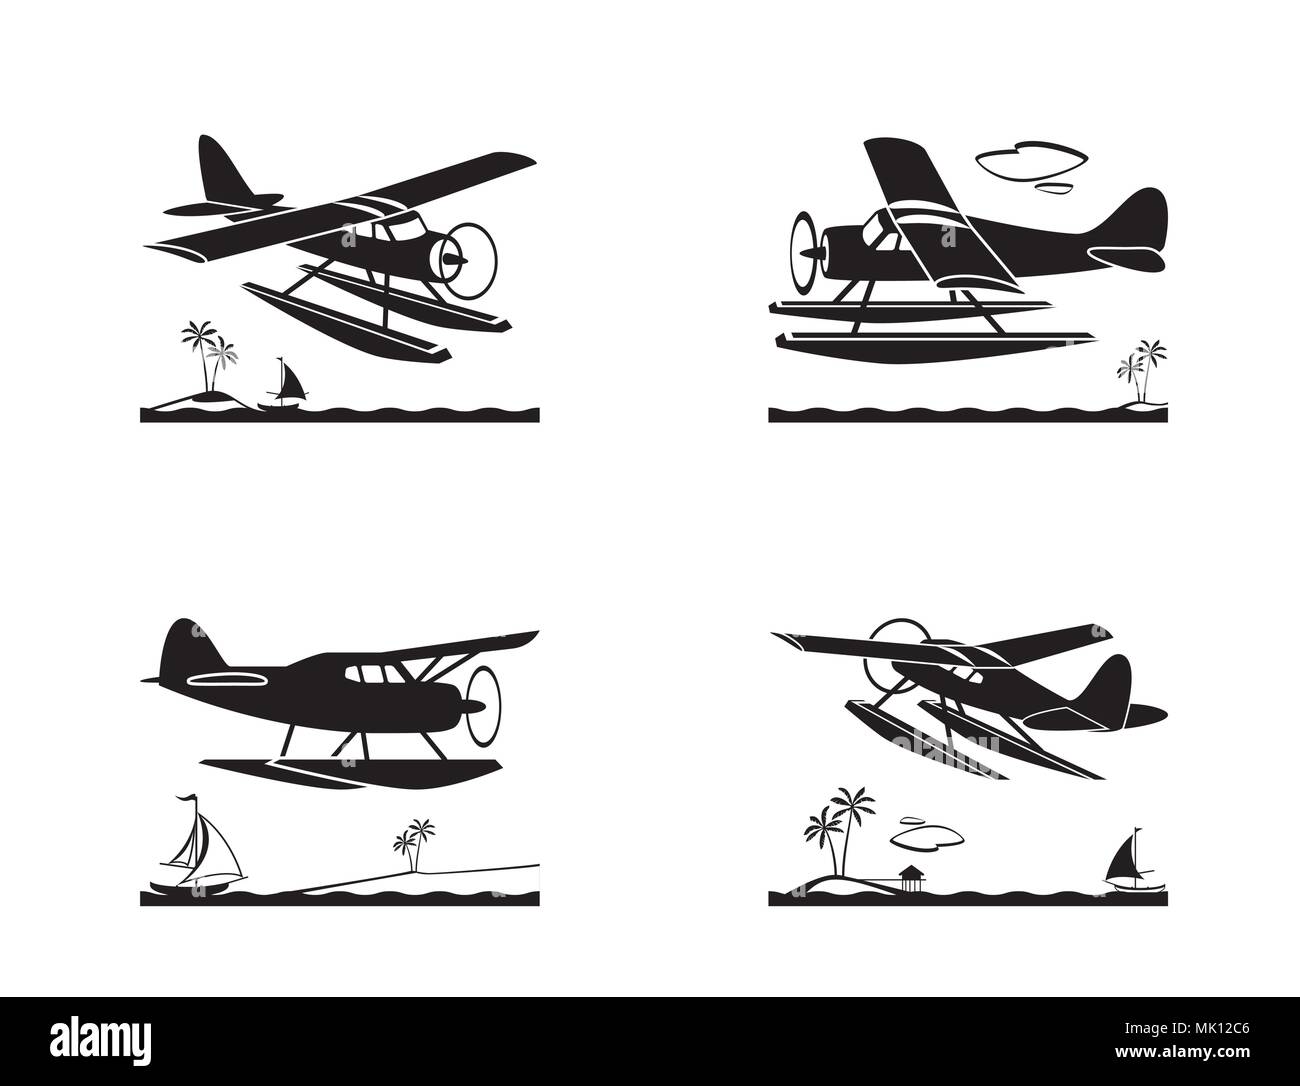 Seaplane in flight over sea - vector illustration Stock Vector